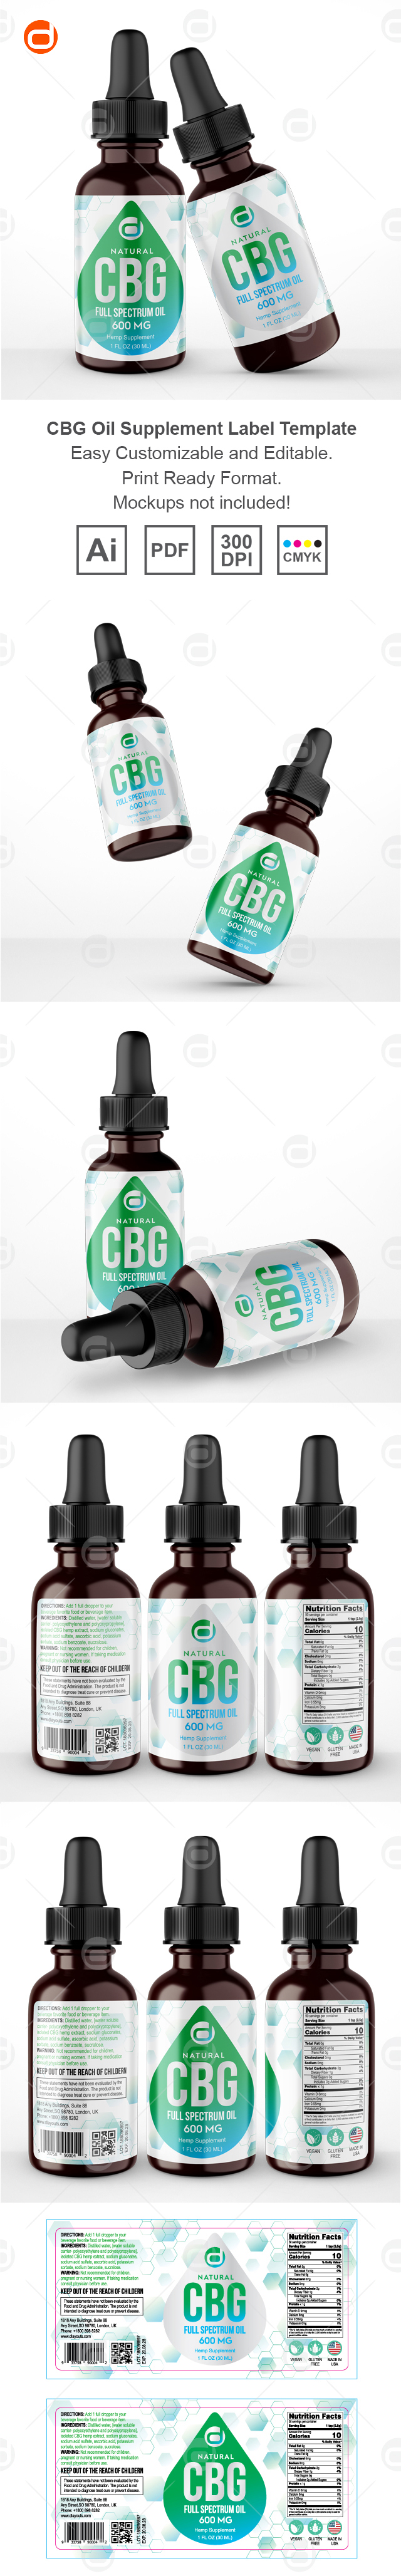 CBG Oil Supplement Label Template